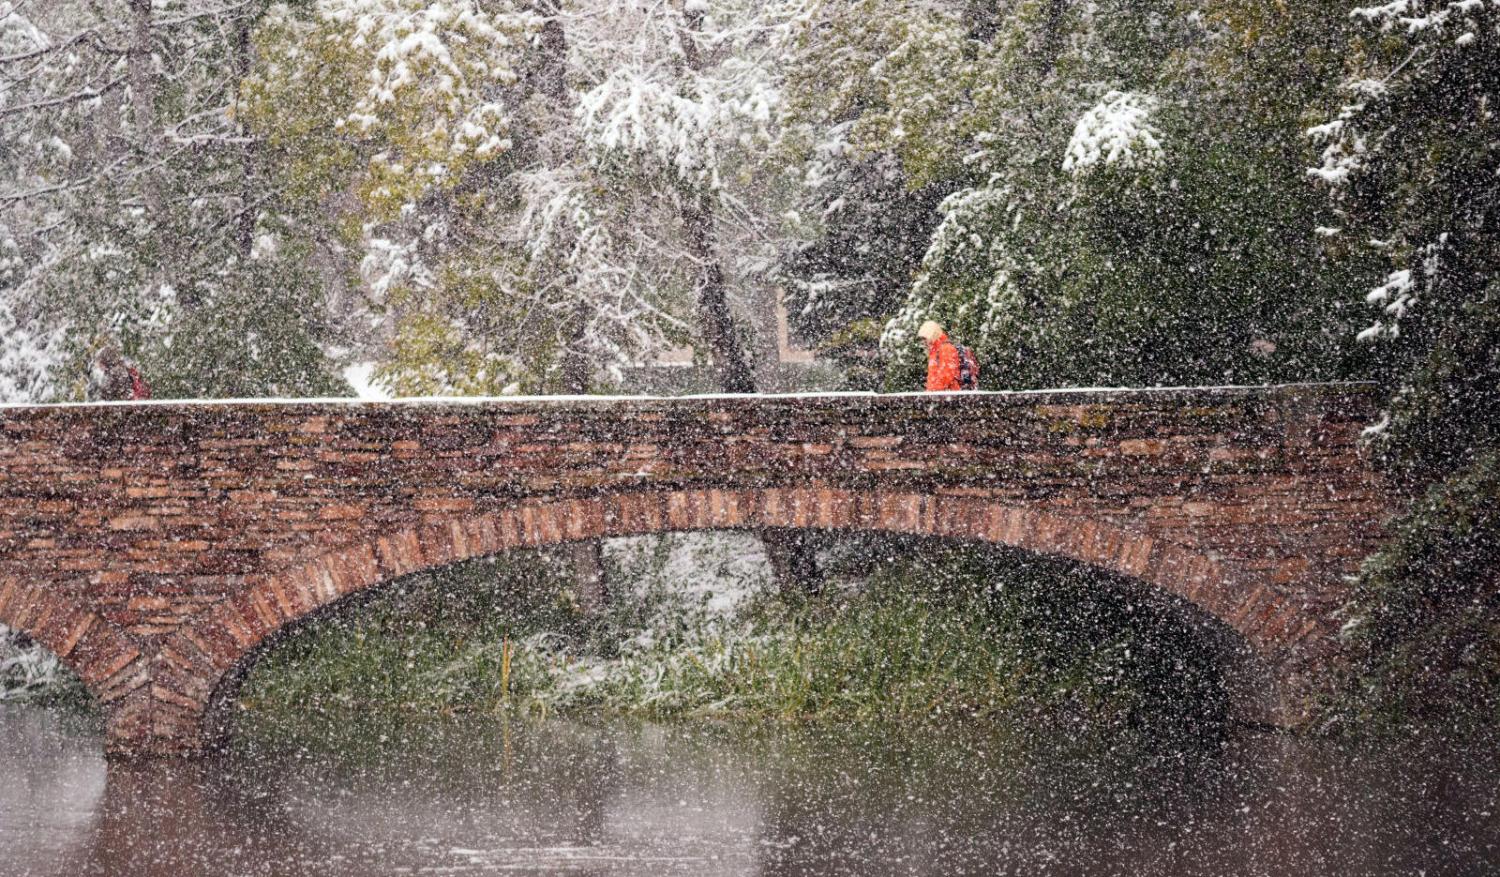 Snow falls as pedestrian crosses Varsity Bridge